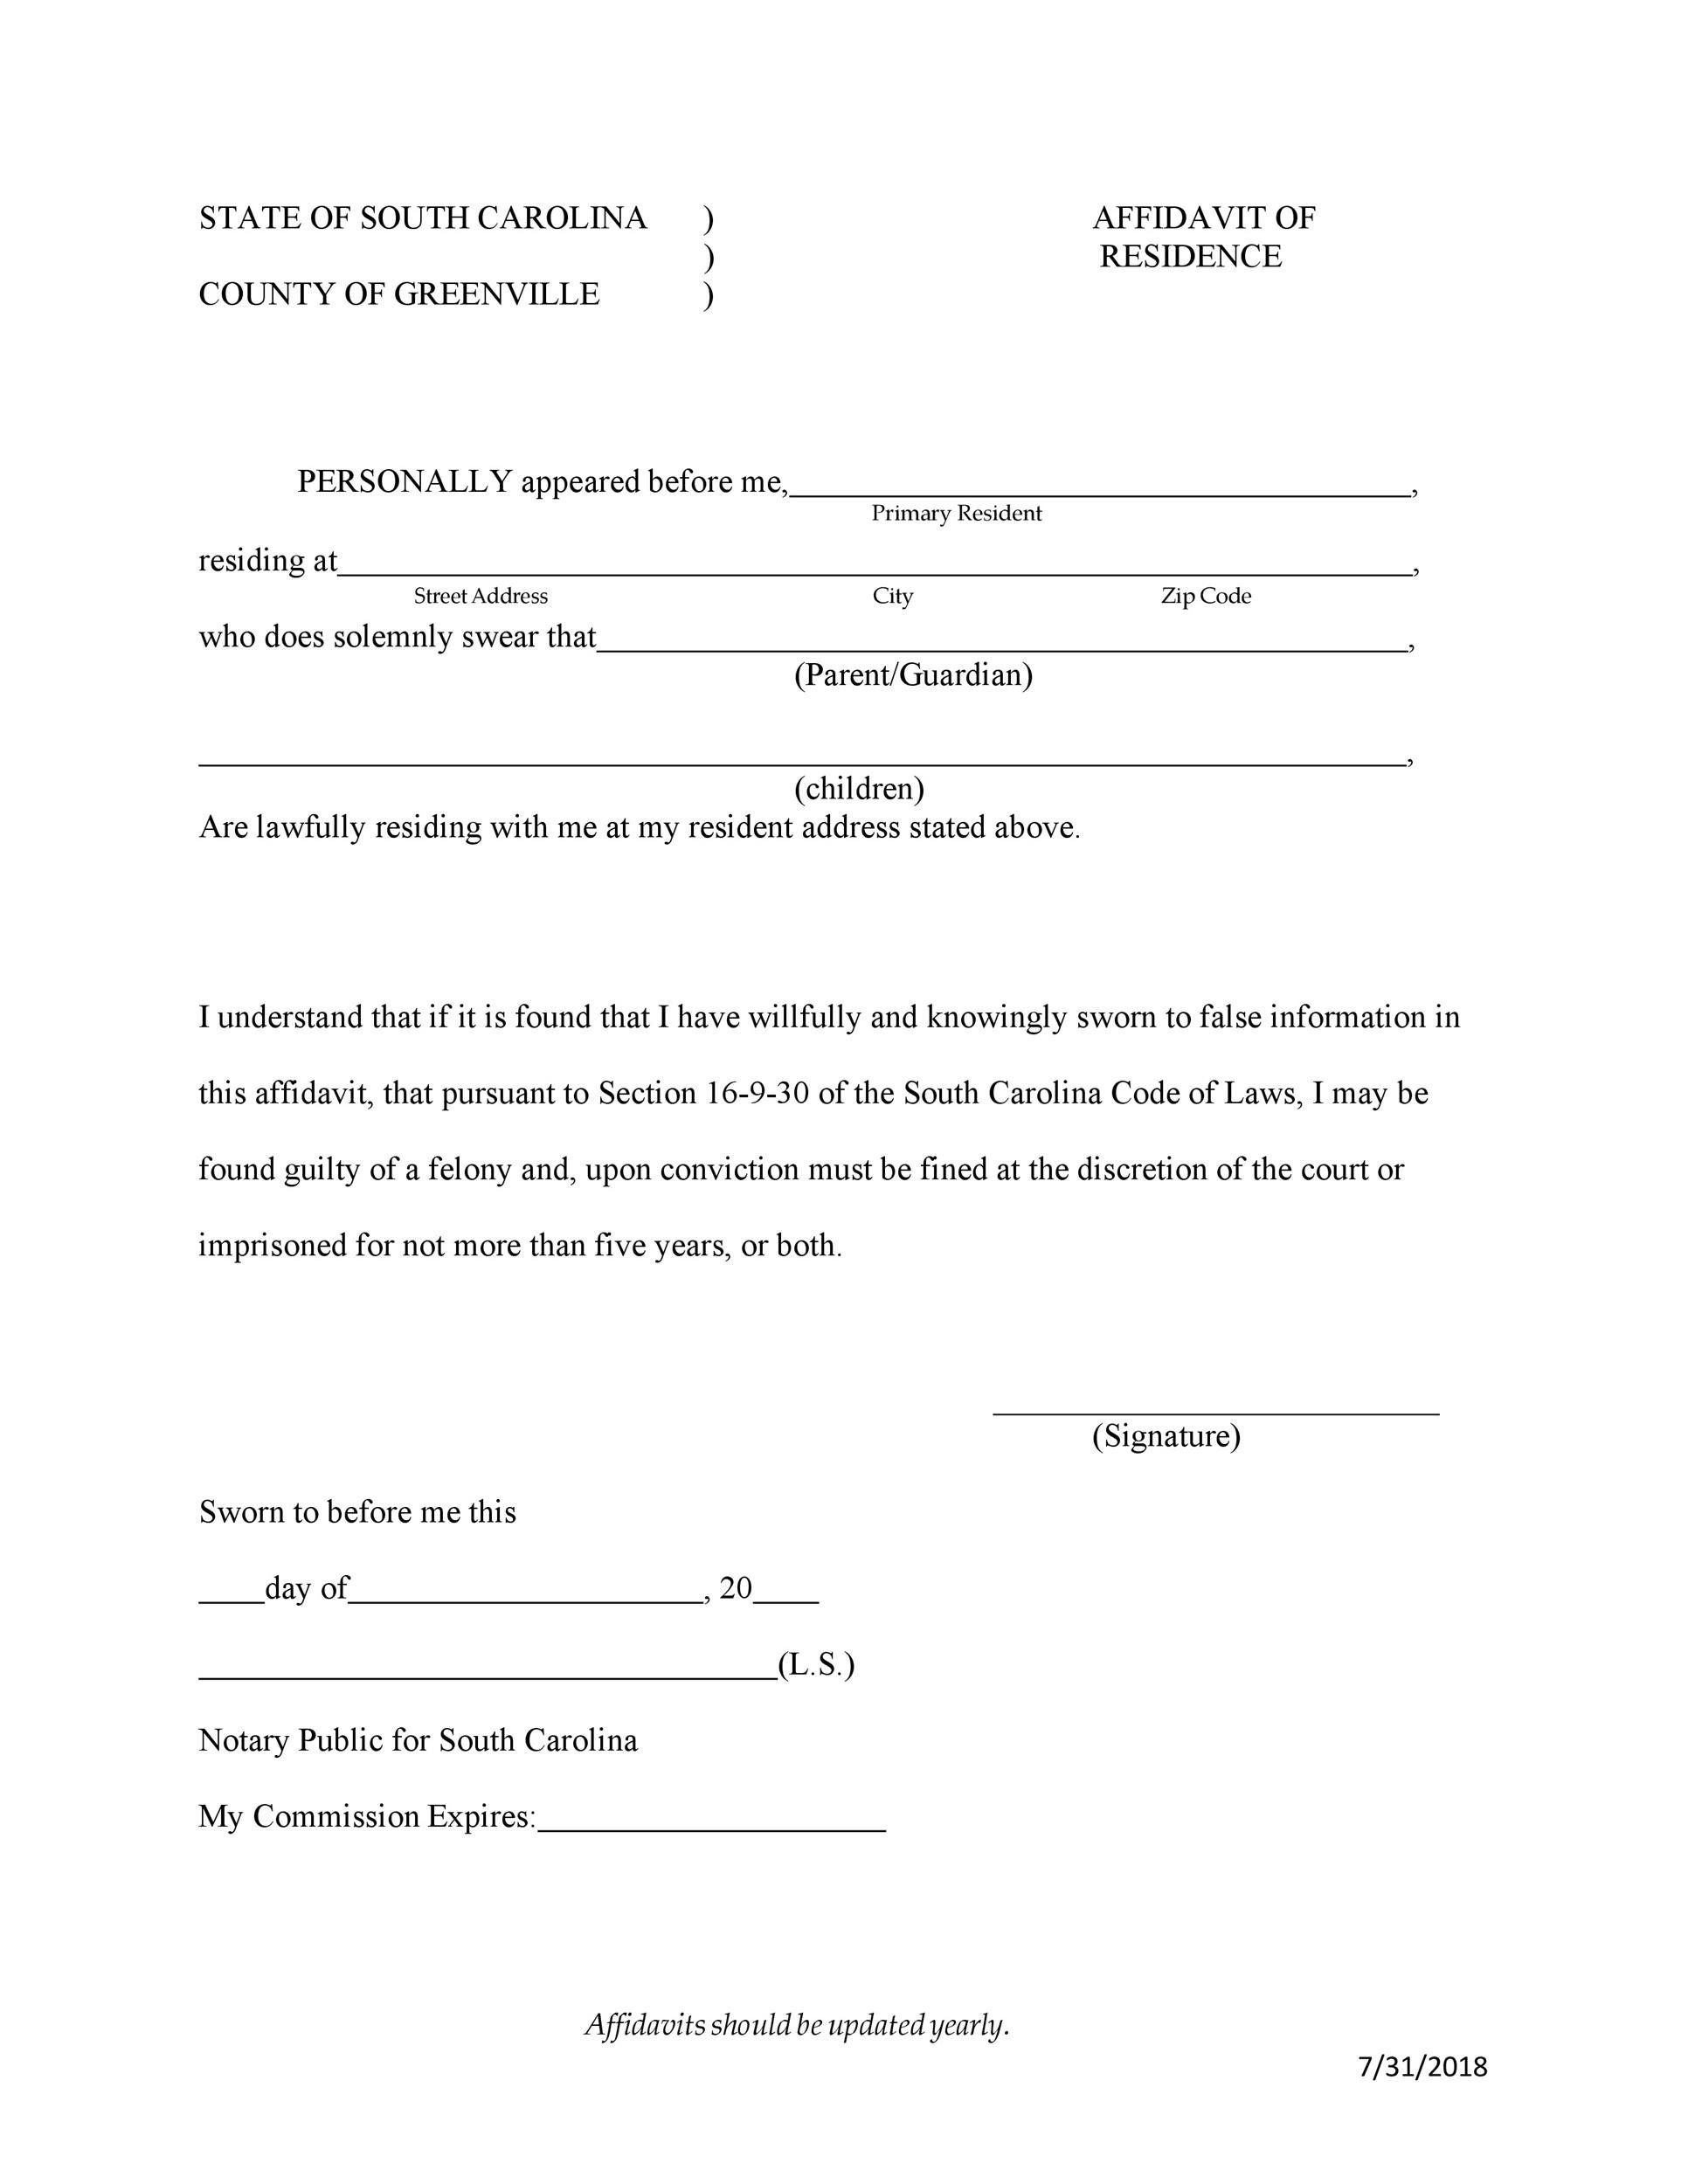 free-printable-affidavit-of-residence-tutore-org-master-of-documents